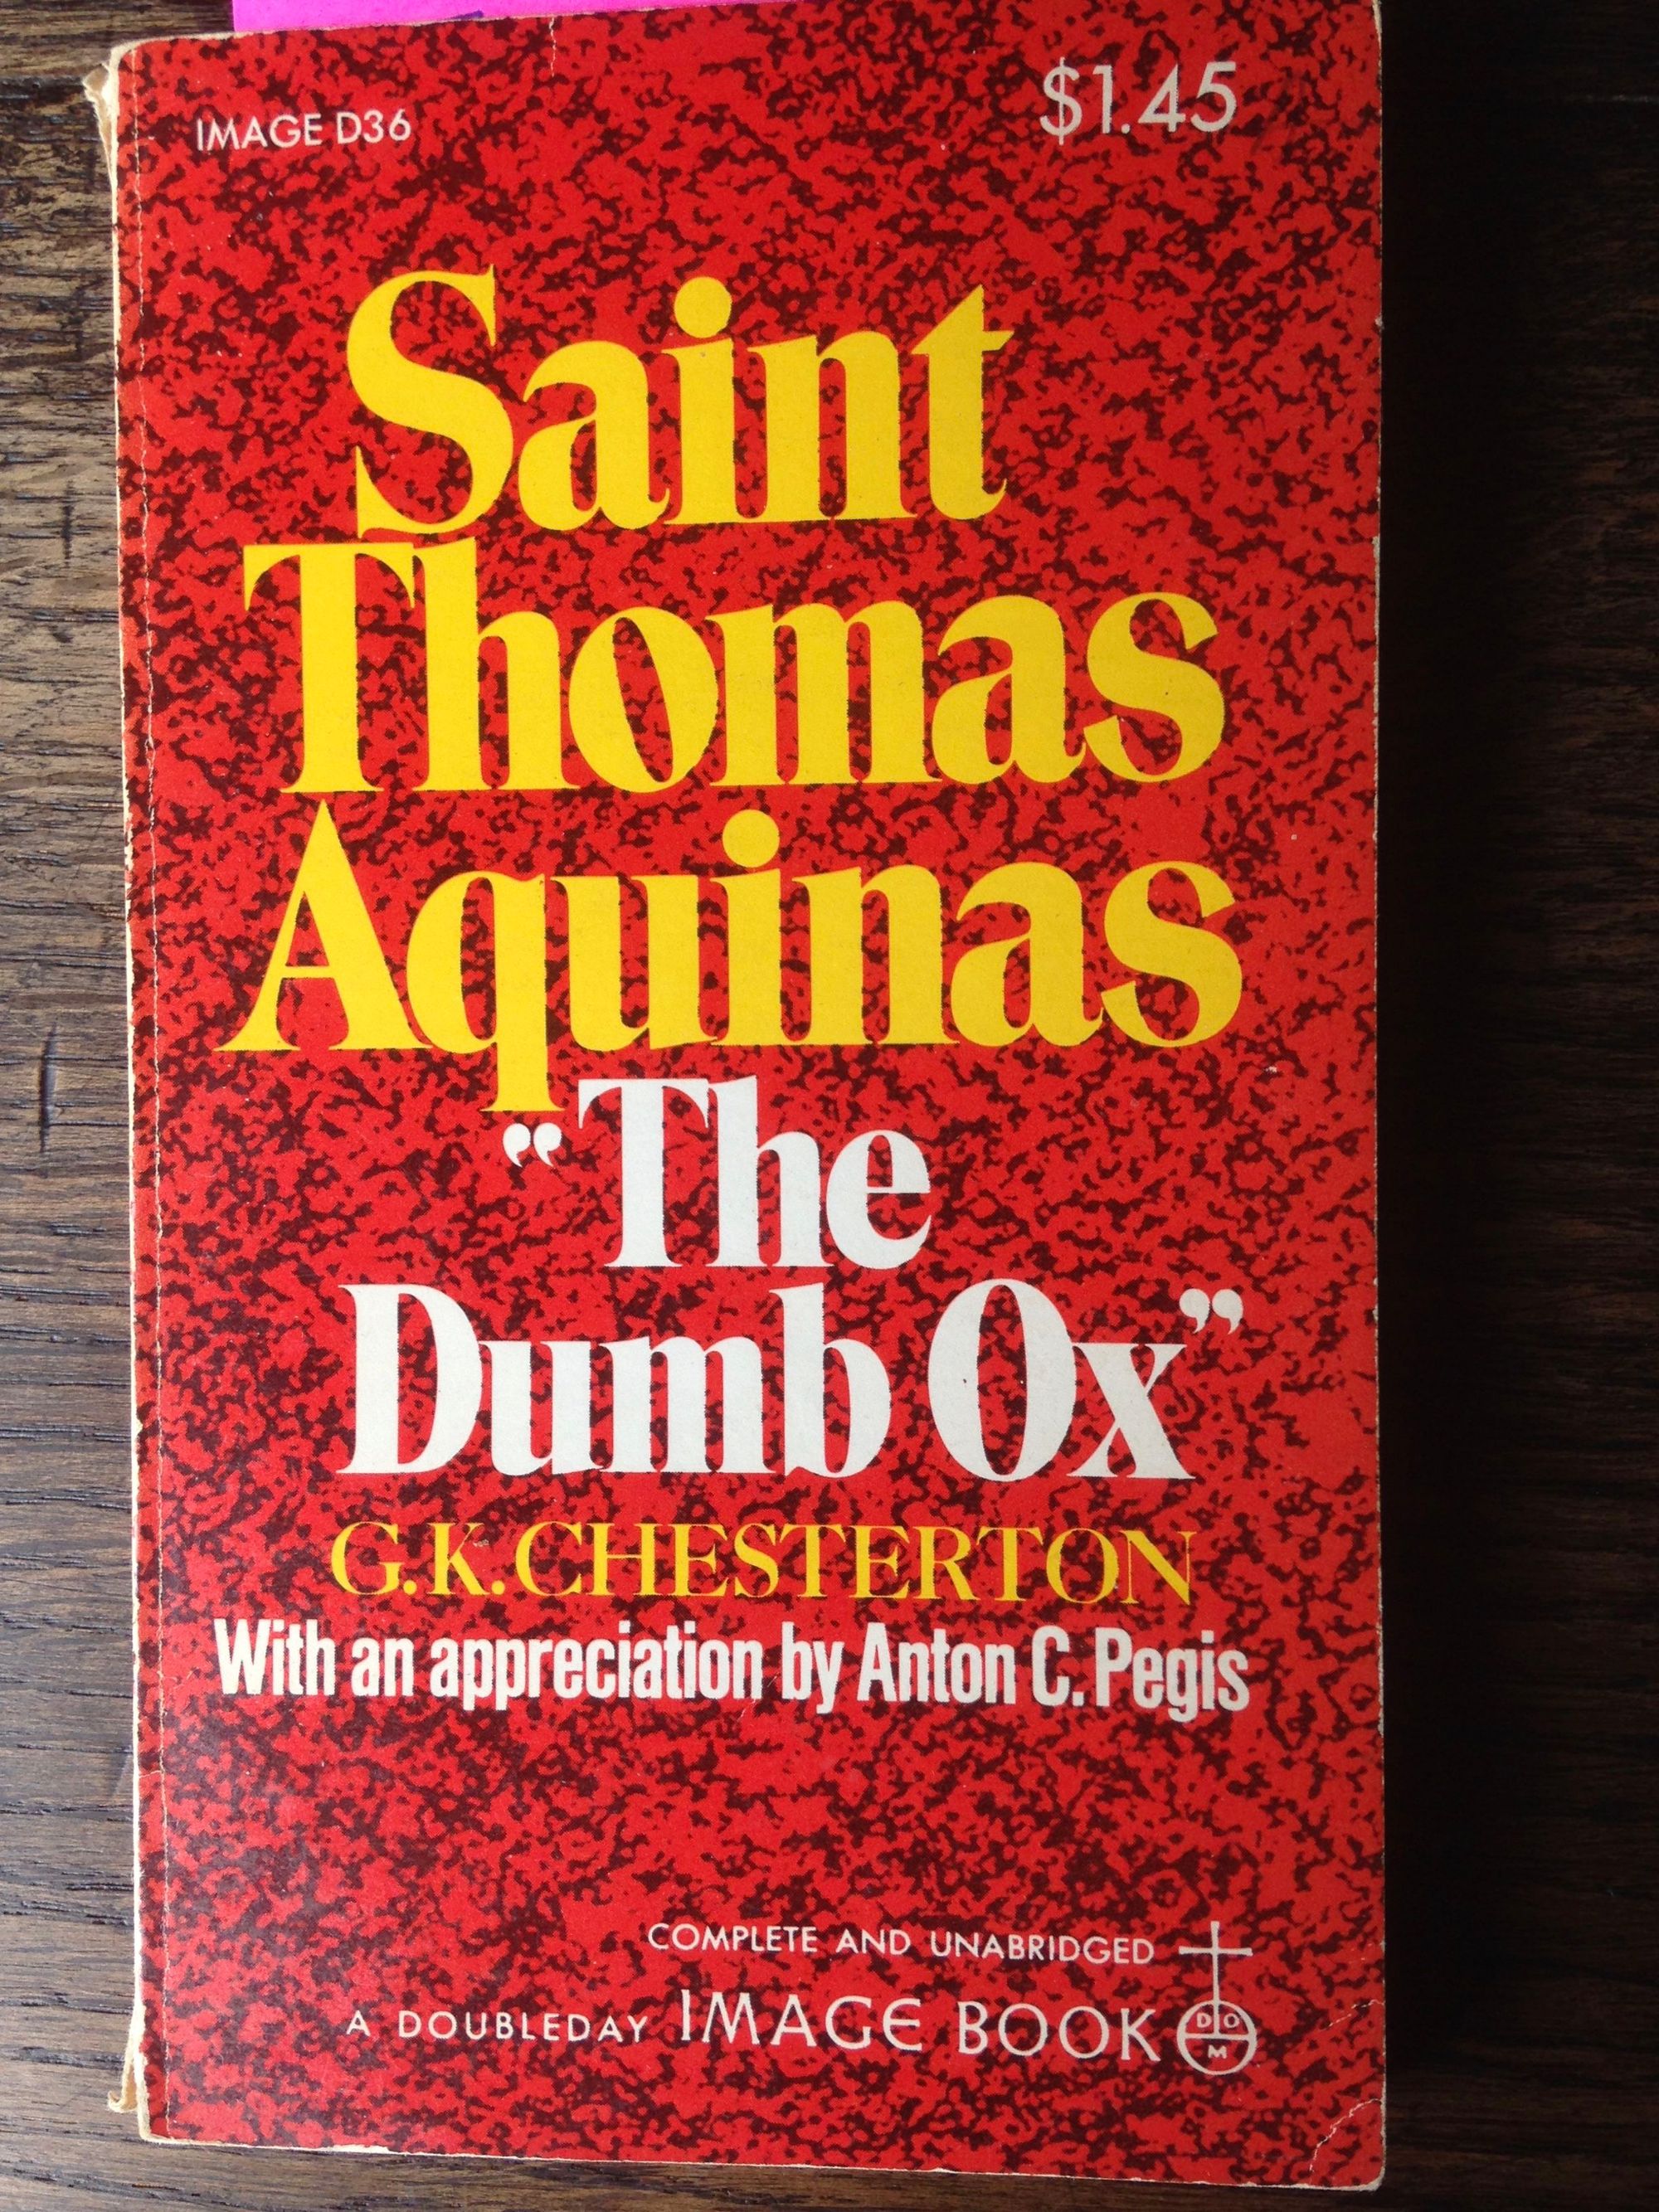 St. Thomas Aquinas: “The Dumb Ox, “by G.K. Chesterton